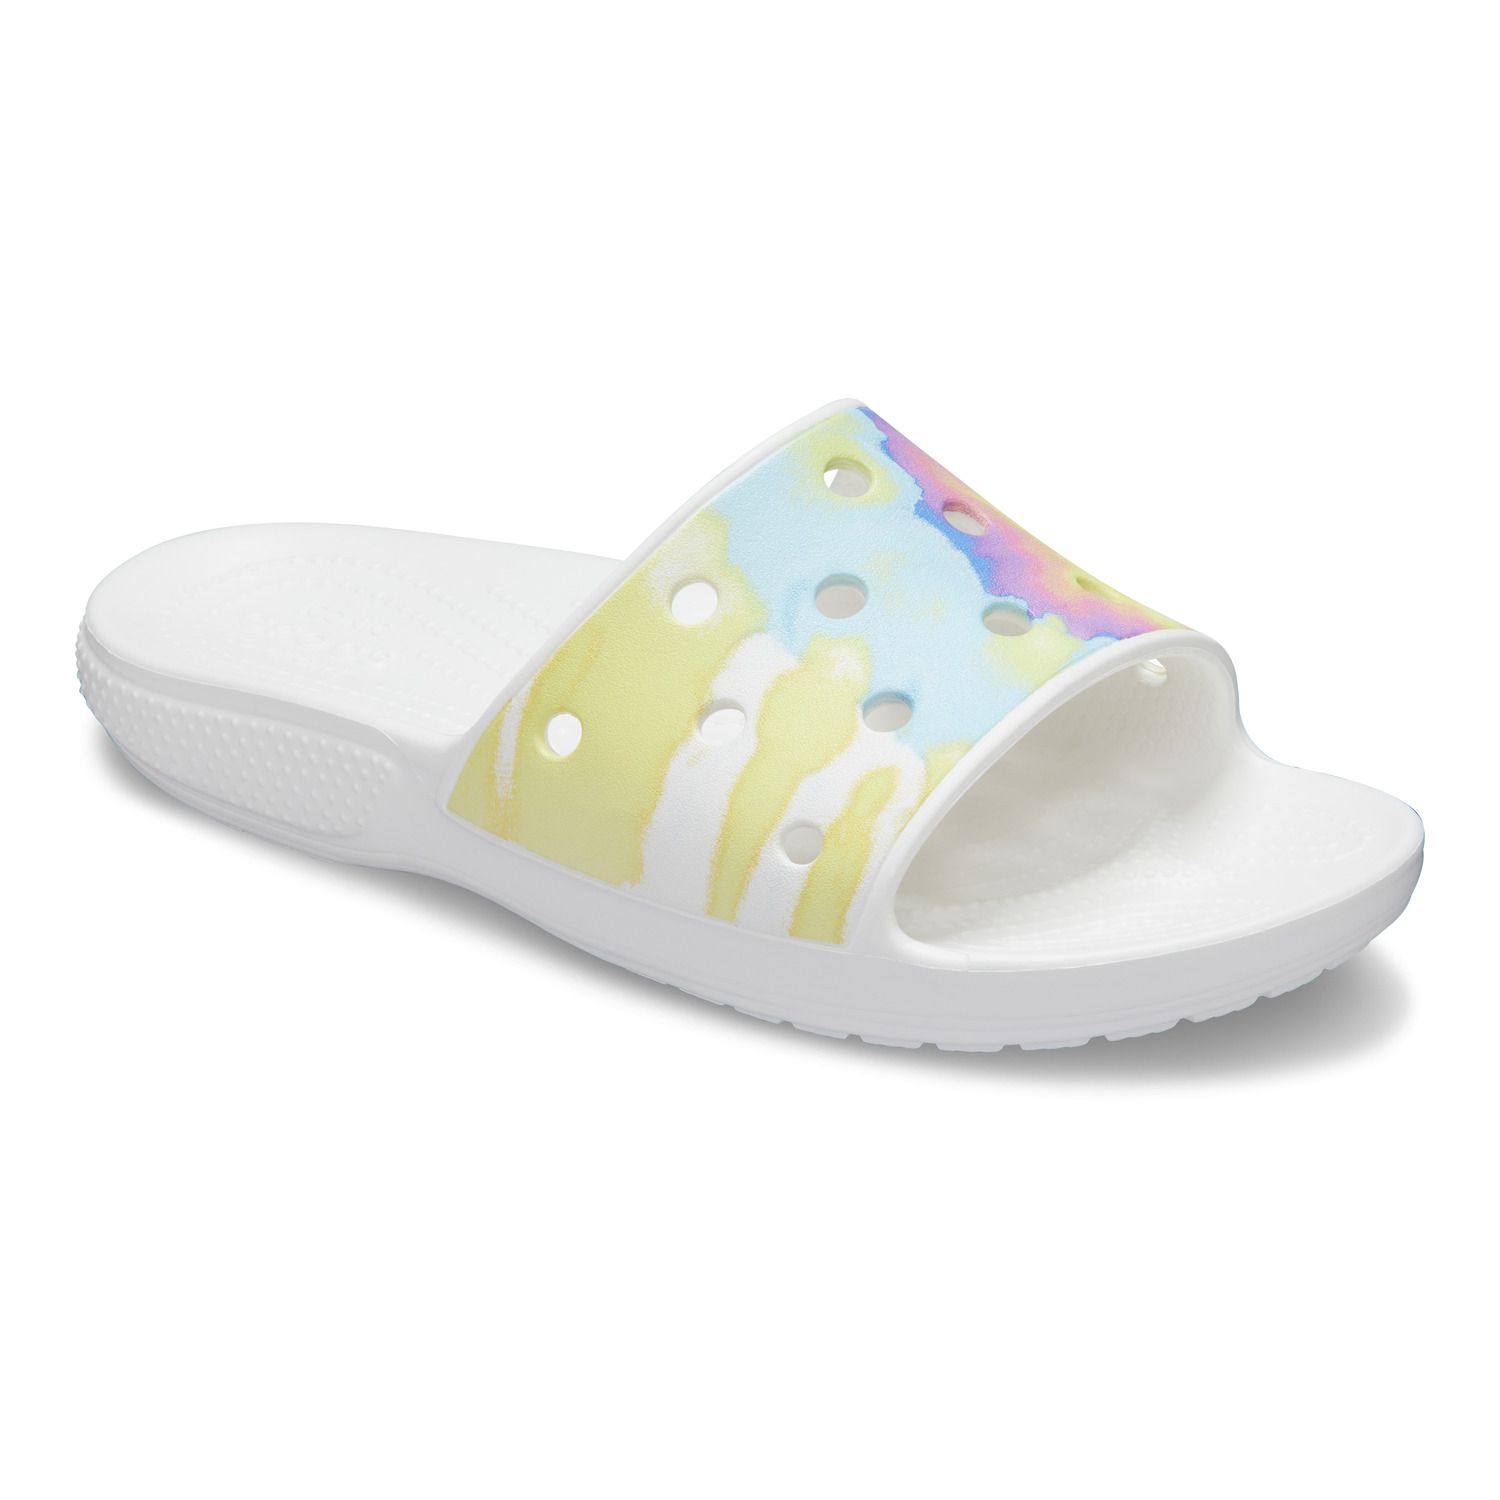 Crocs Classic Tie Dye Adult Slide Sandals